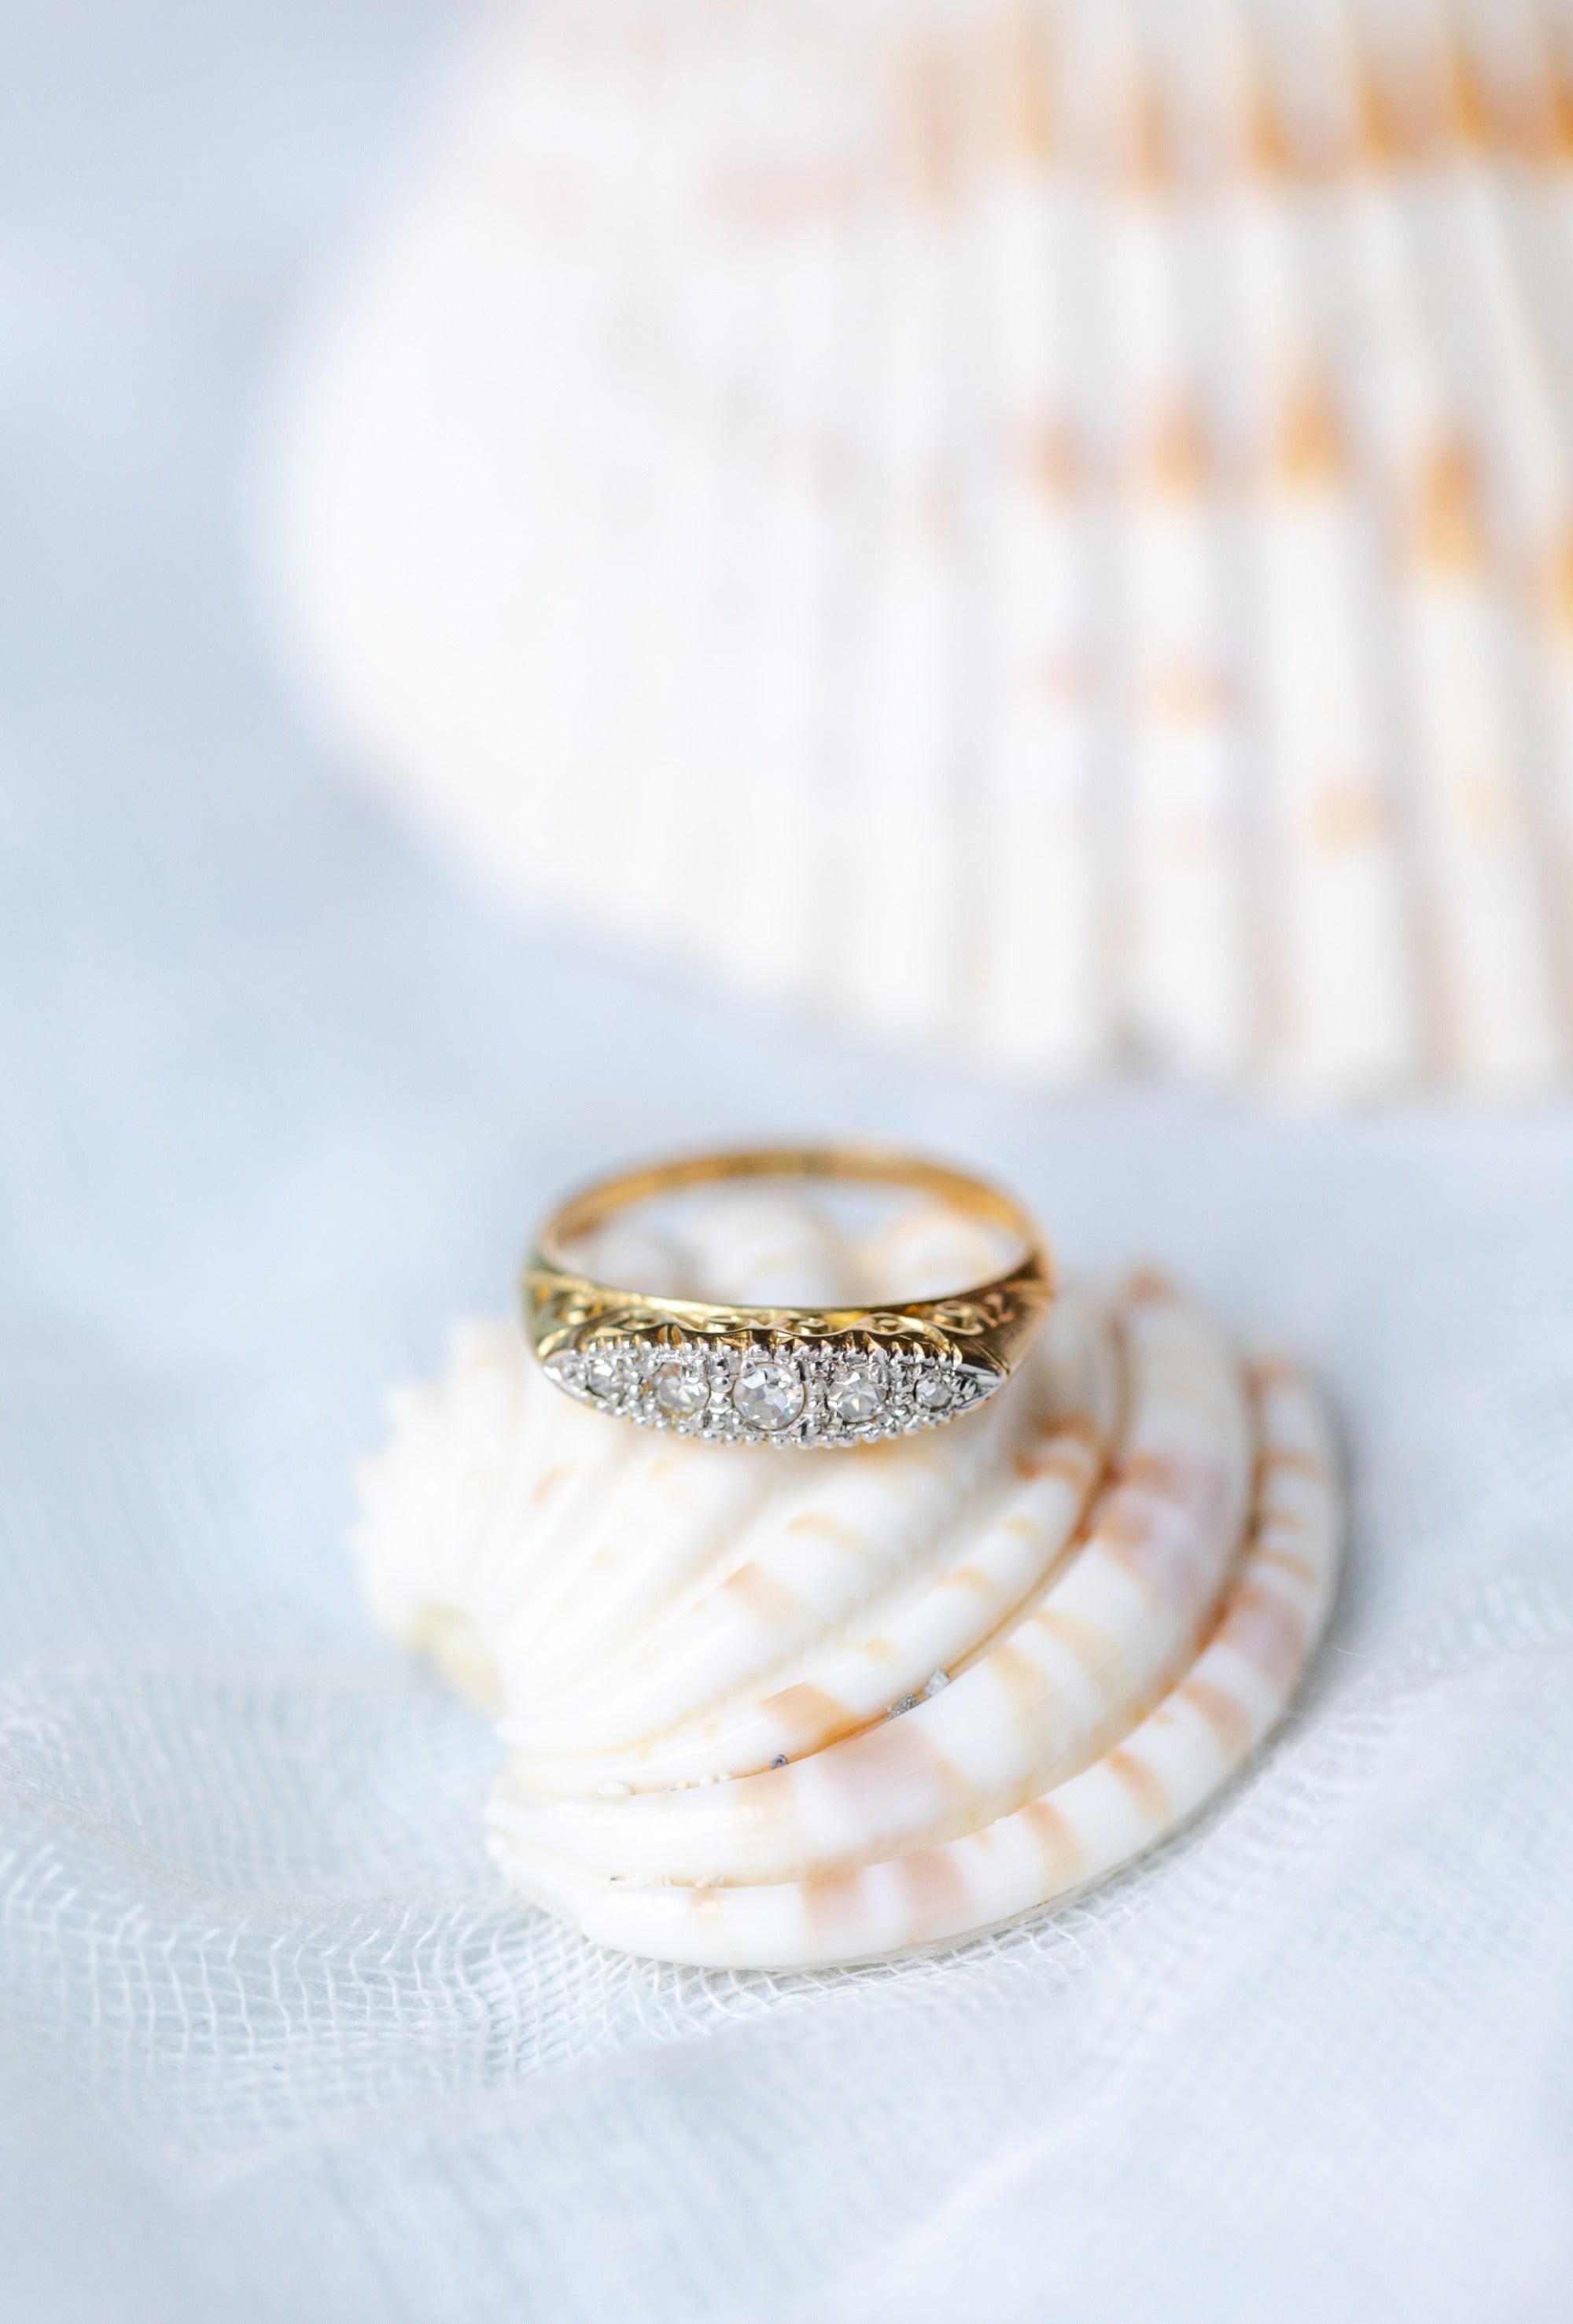 Odette Art Nouveau 1900s Platinum and 18K Yellow Gold Diamond Engagement Ring-0